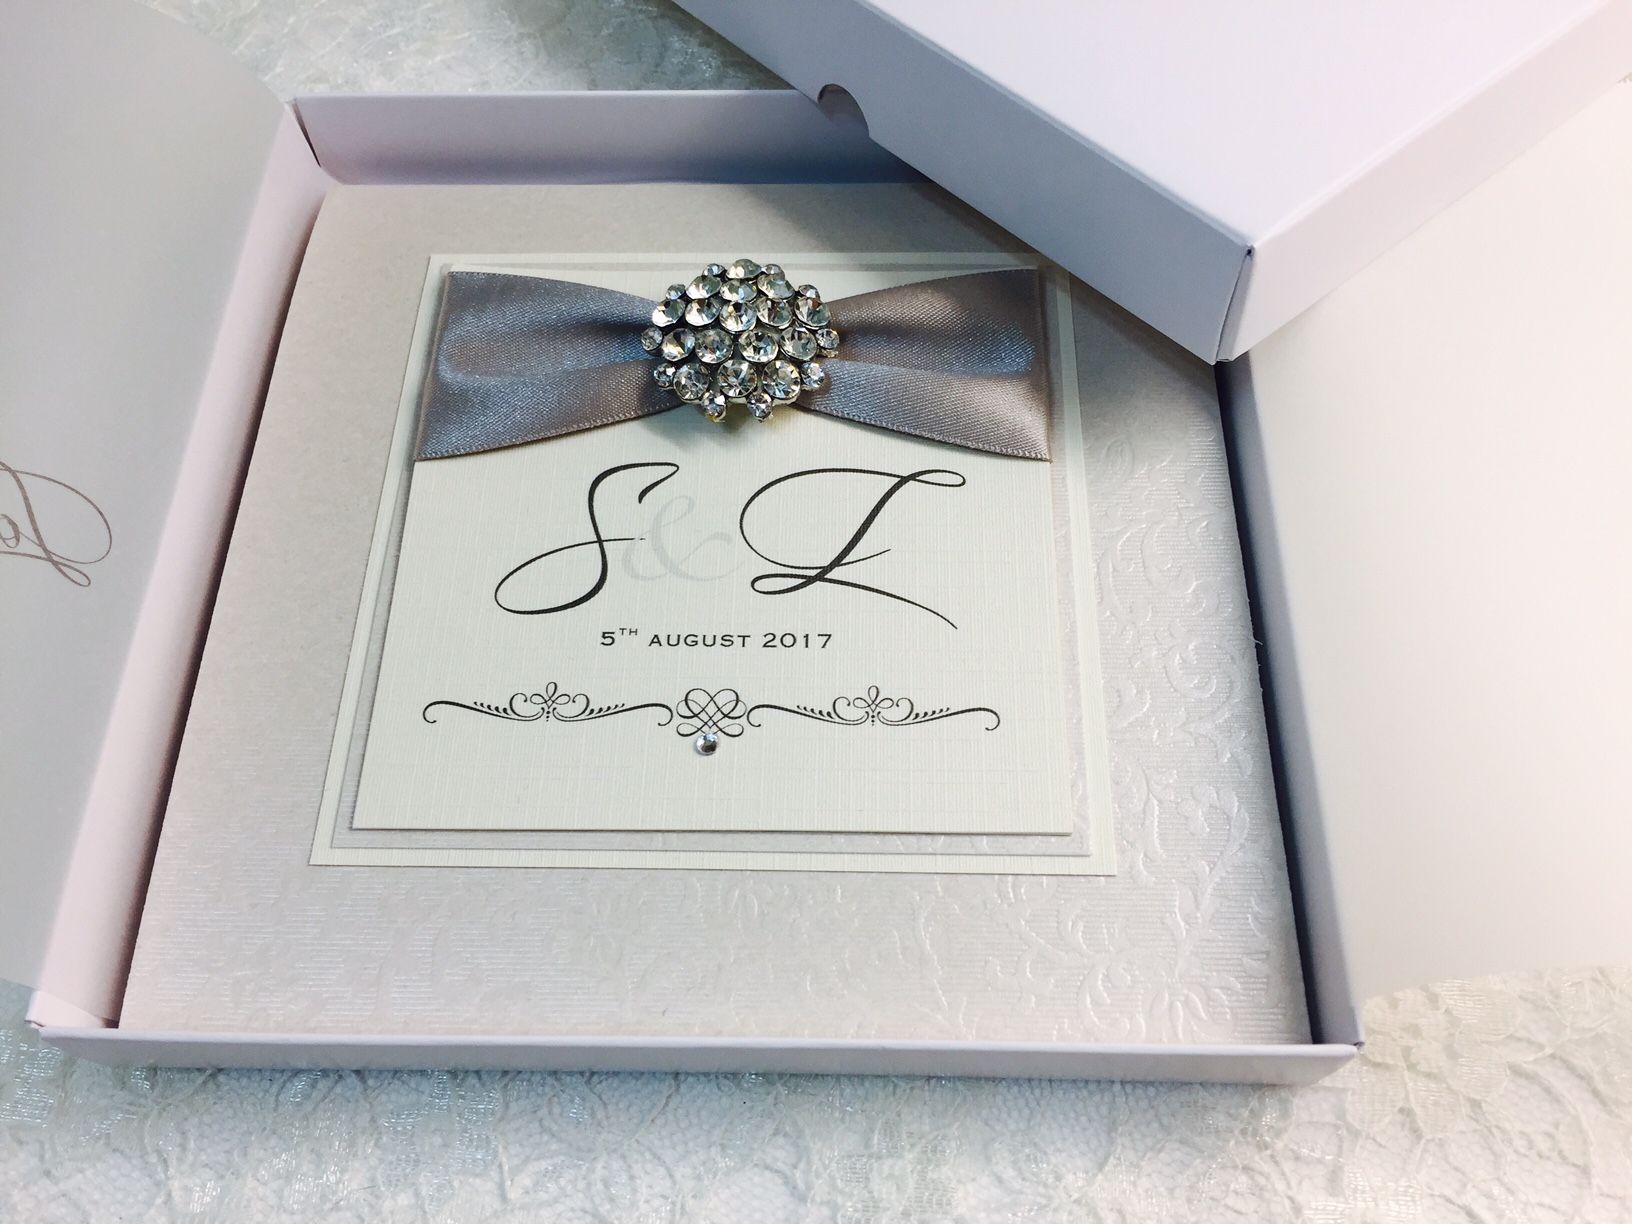 Monogram boxed wedding invitations with initials